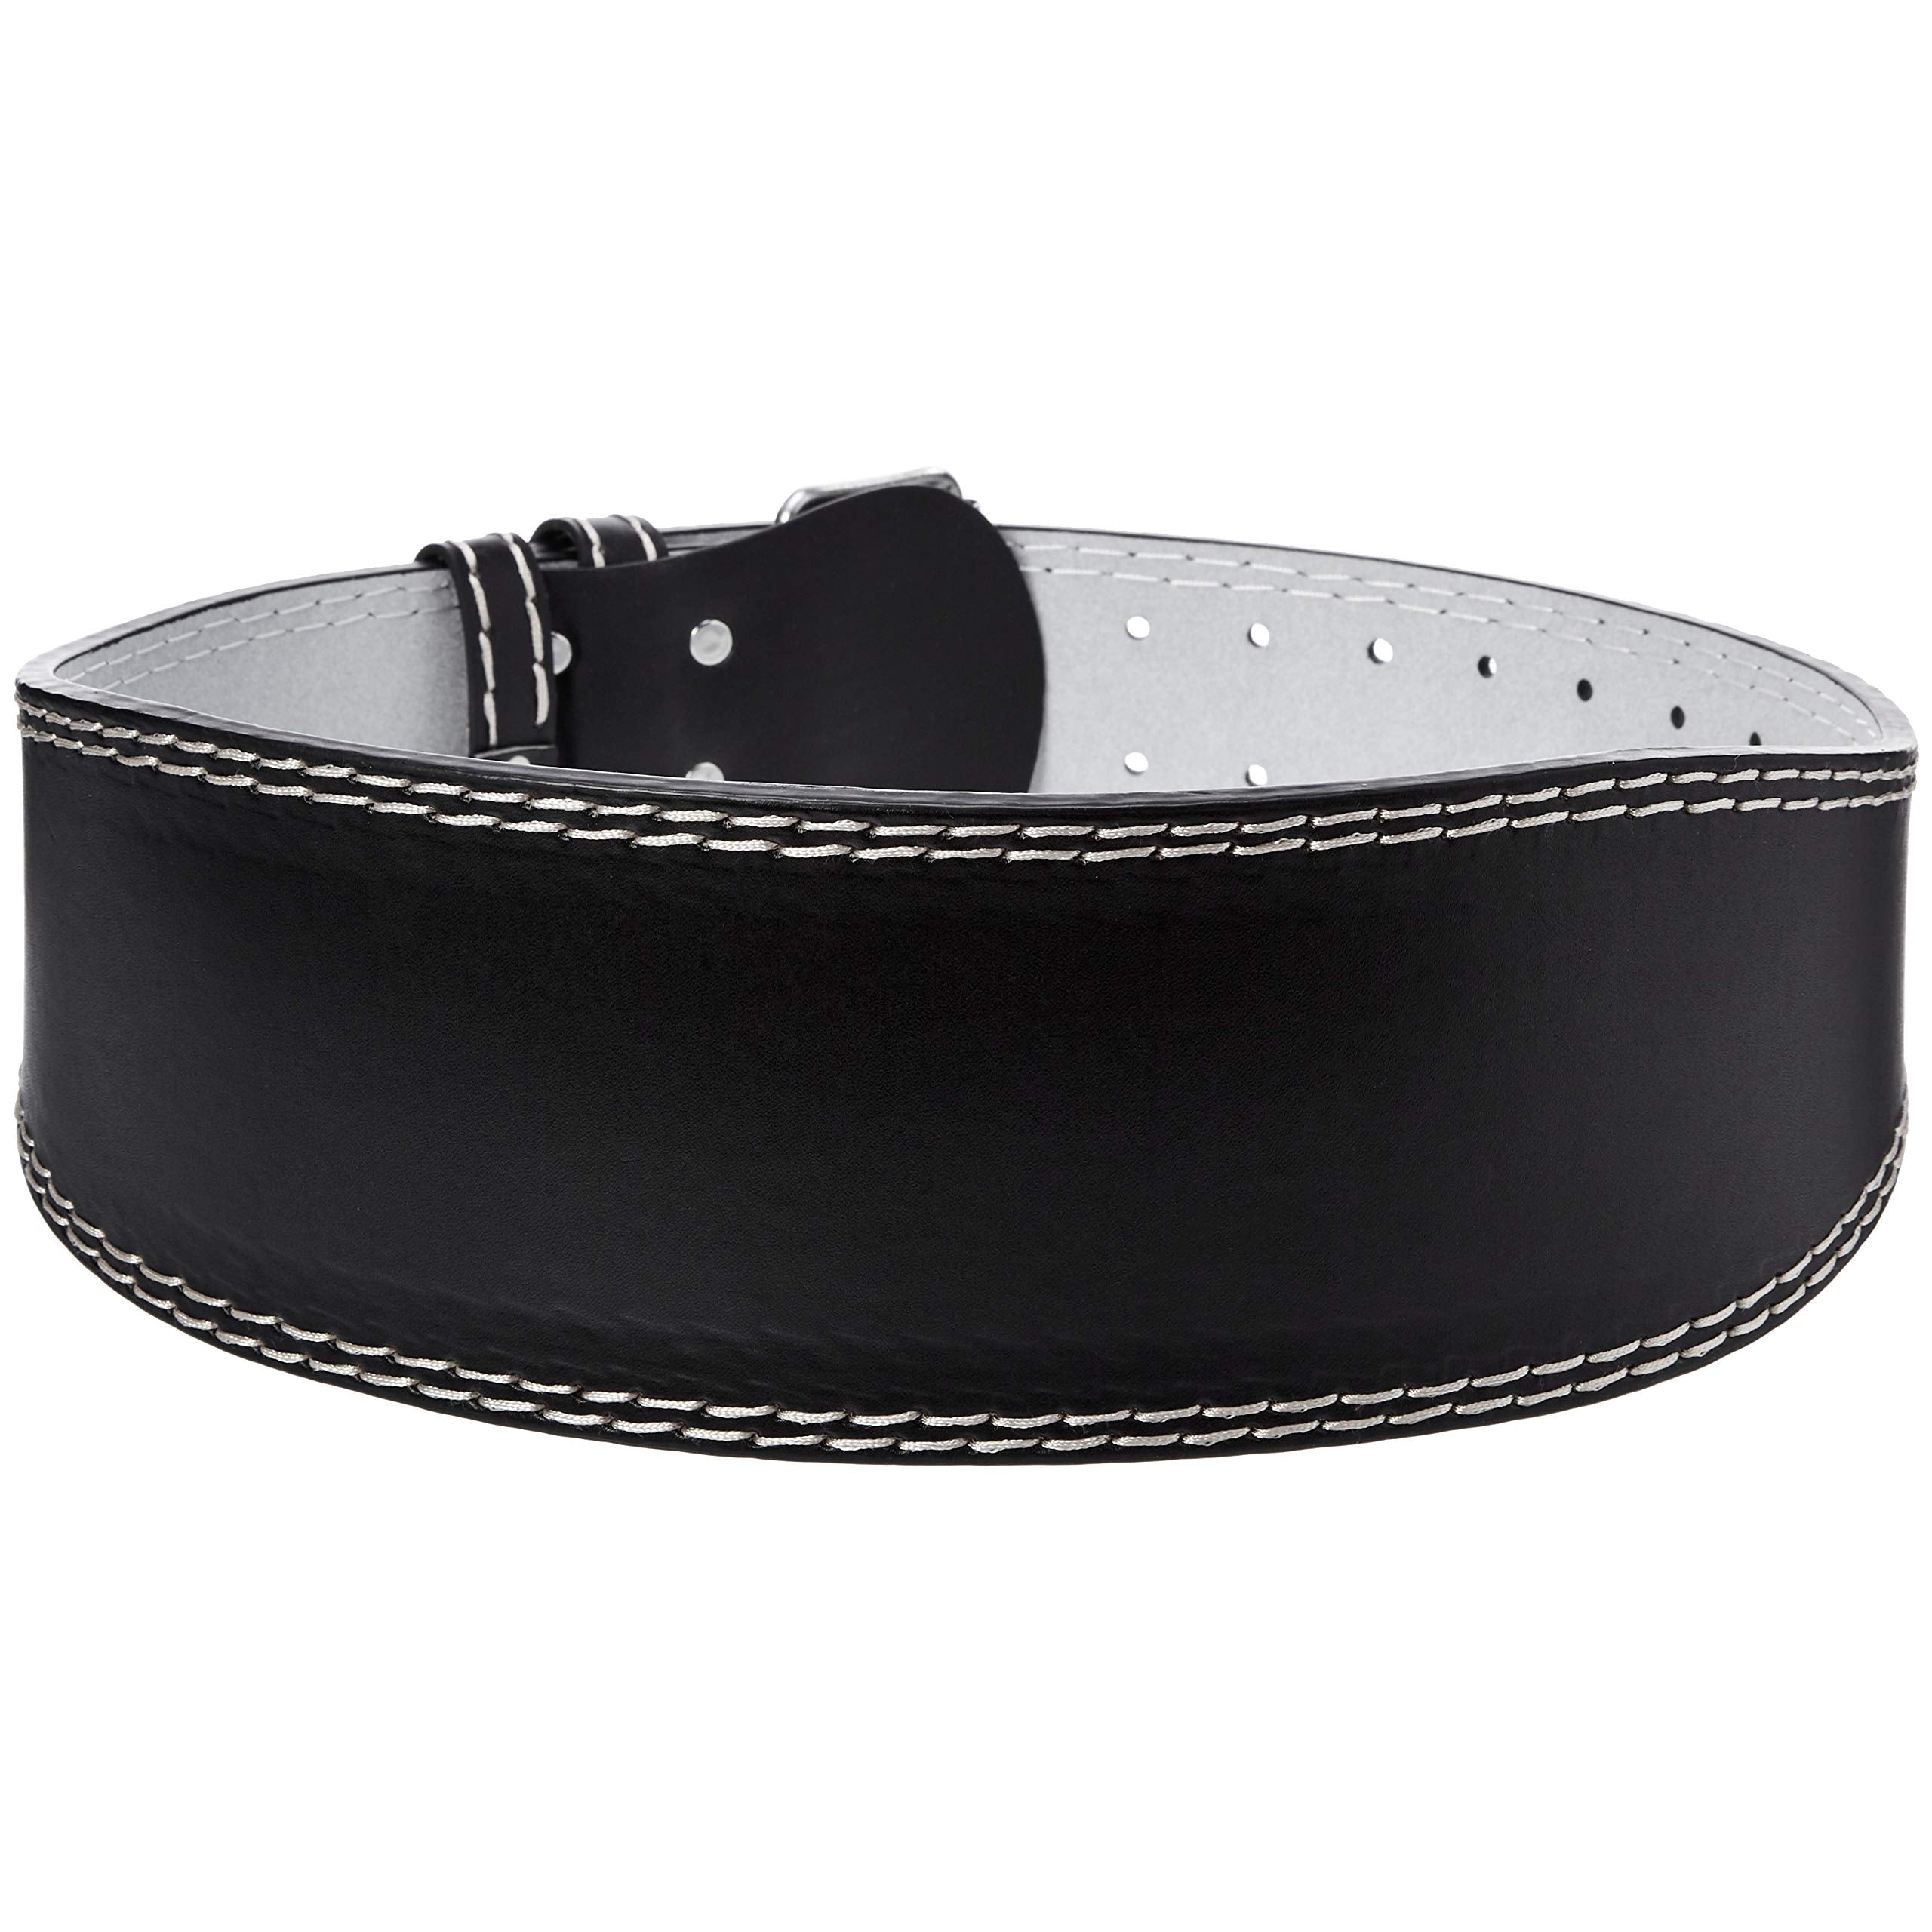 AmazonBasics 4 Inch Wide Padded Weight Lifting Belt - Small, Black